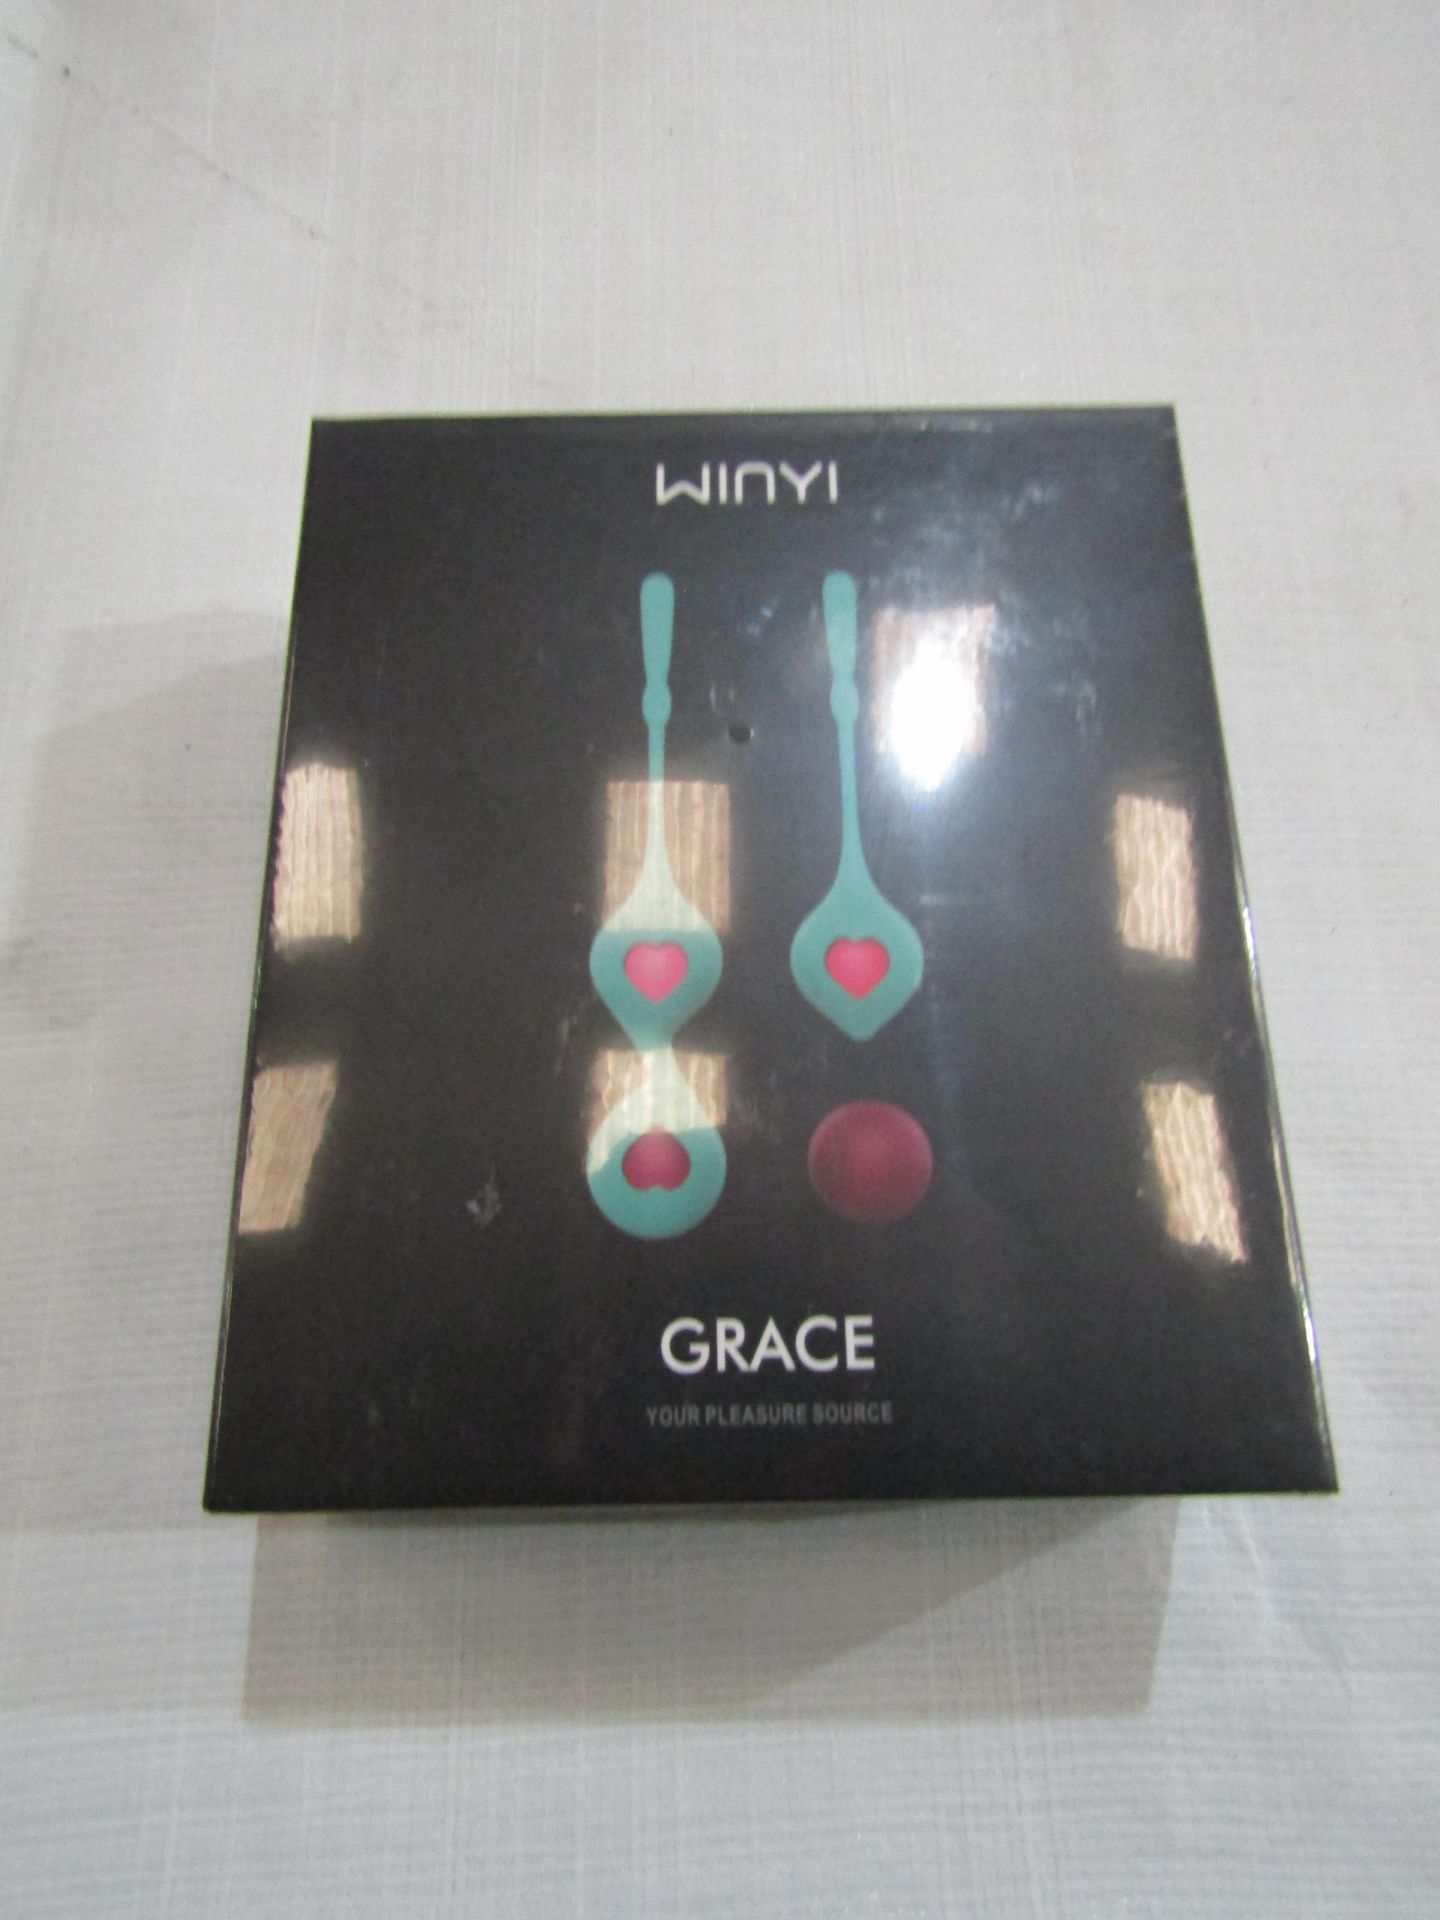 WINYI Grace Soft Silicone Ergonomic Pelvic Floor Trainer - New & Packaged.